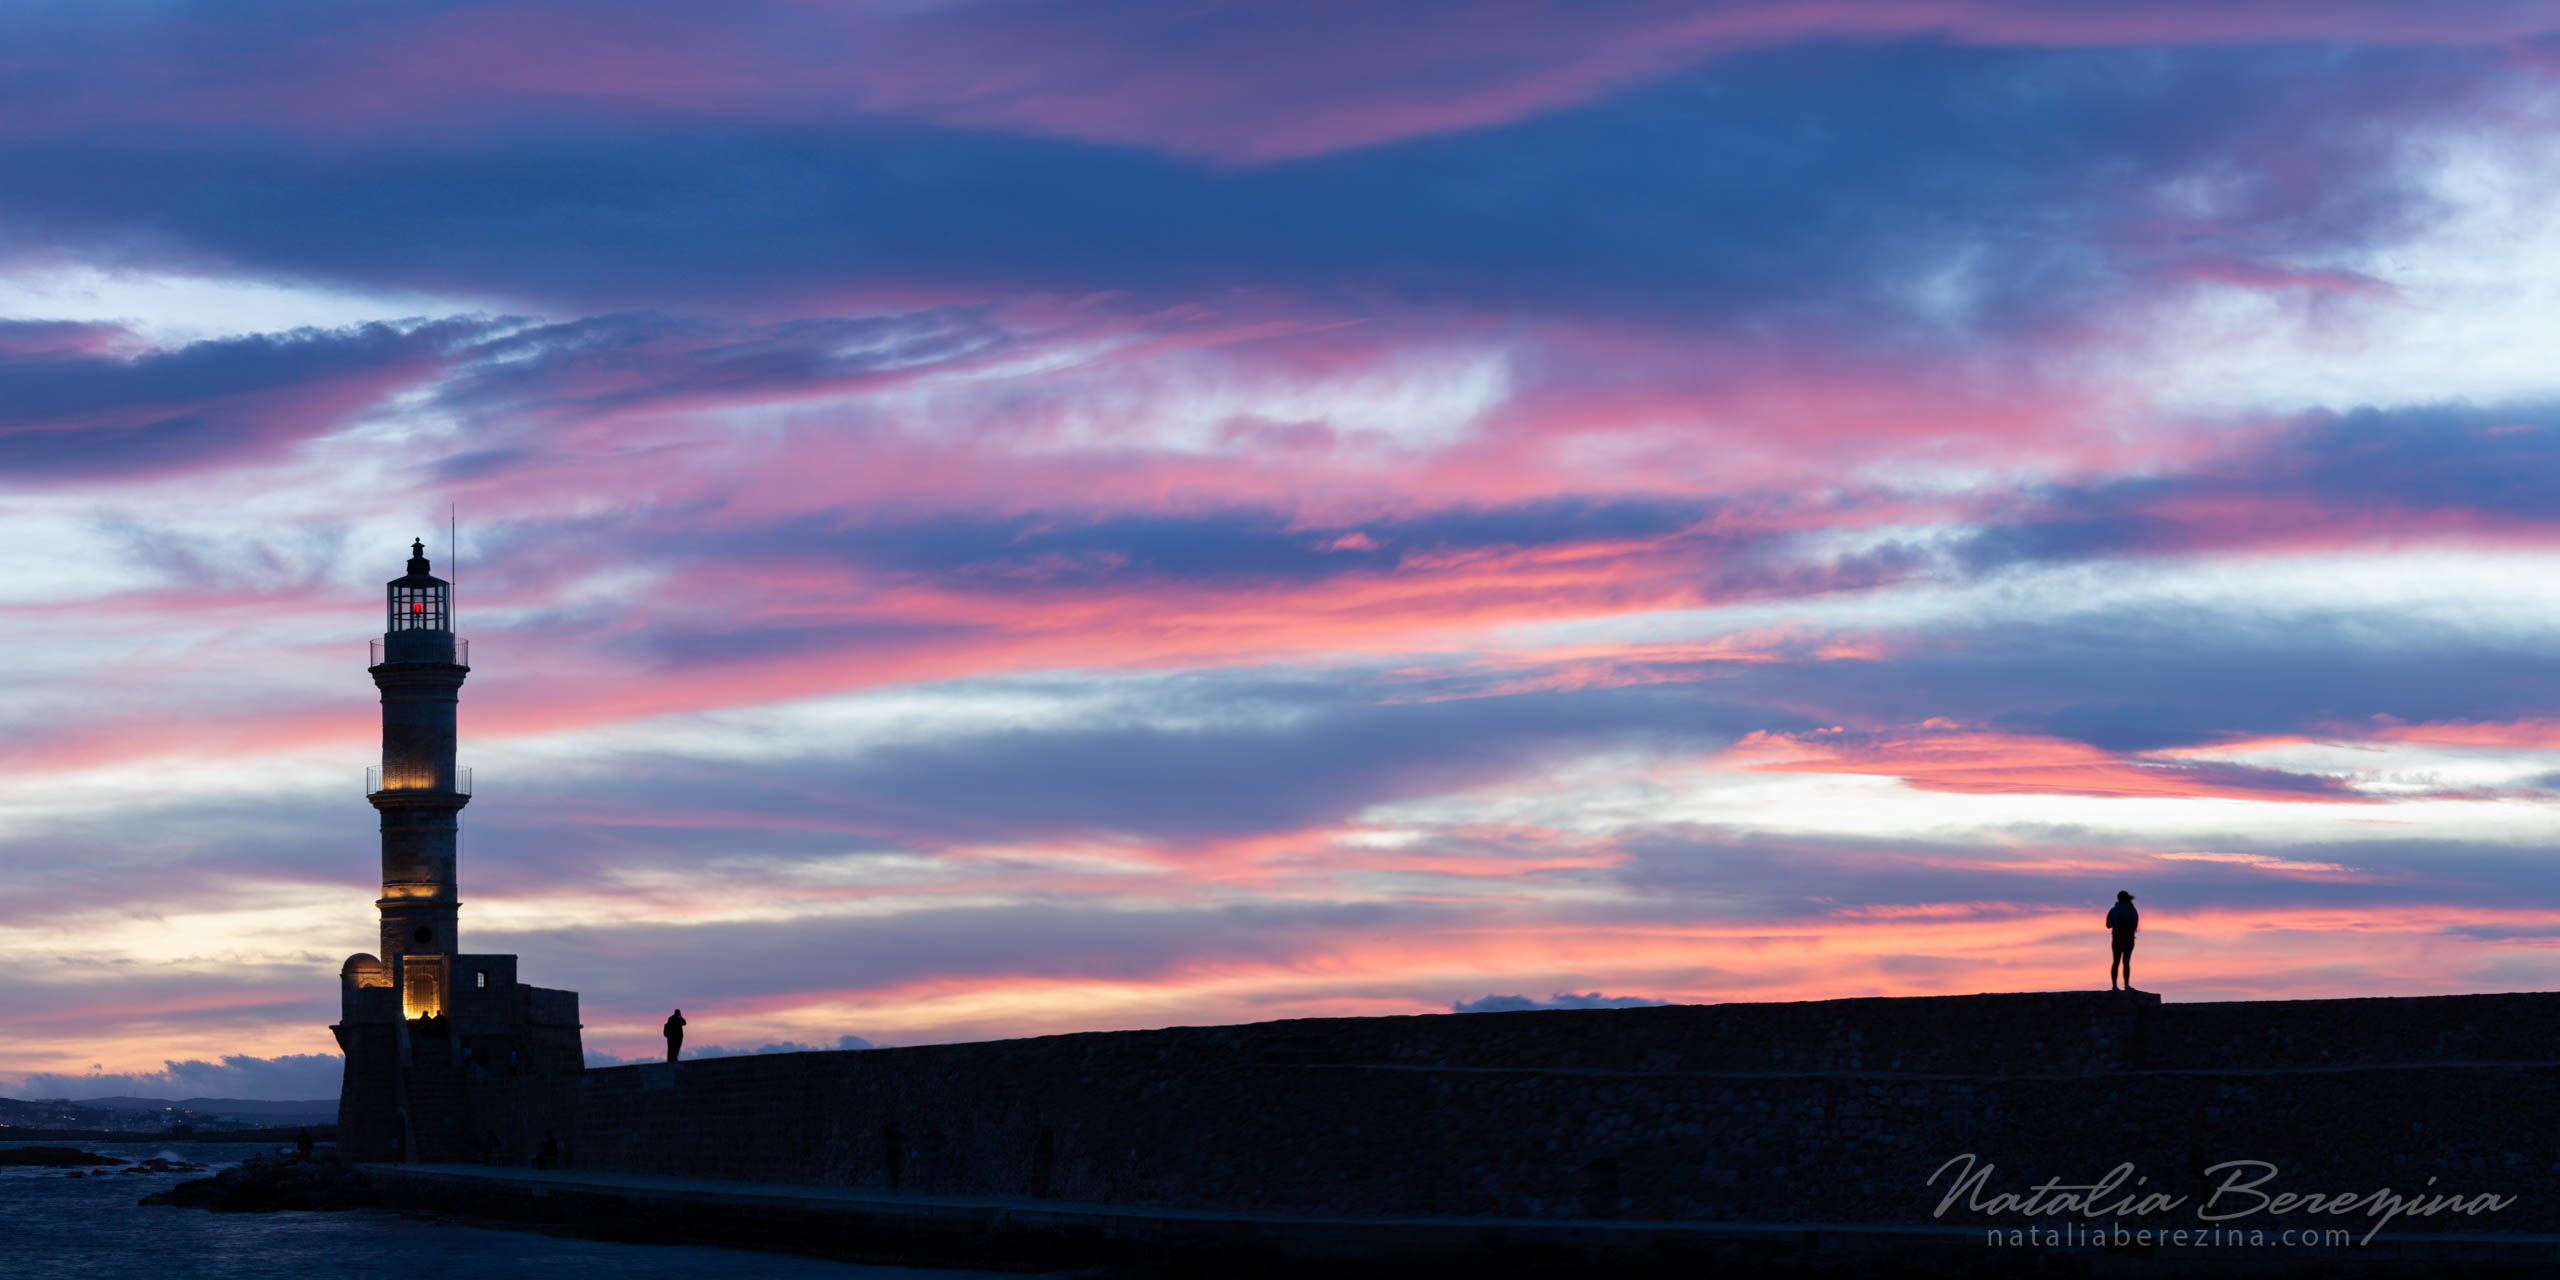 Greece, Crete, cloud, sunset, lighthouse, pink, sky, 2x1 CR1-NBDK1U0964-P - Crete, Greece - Natalia Berezina Photography